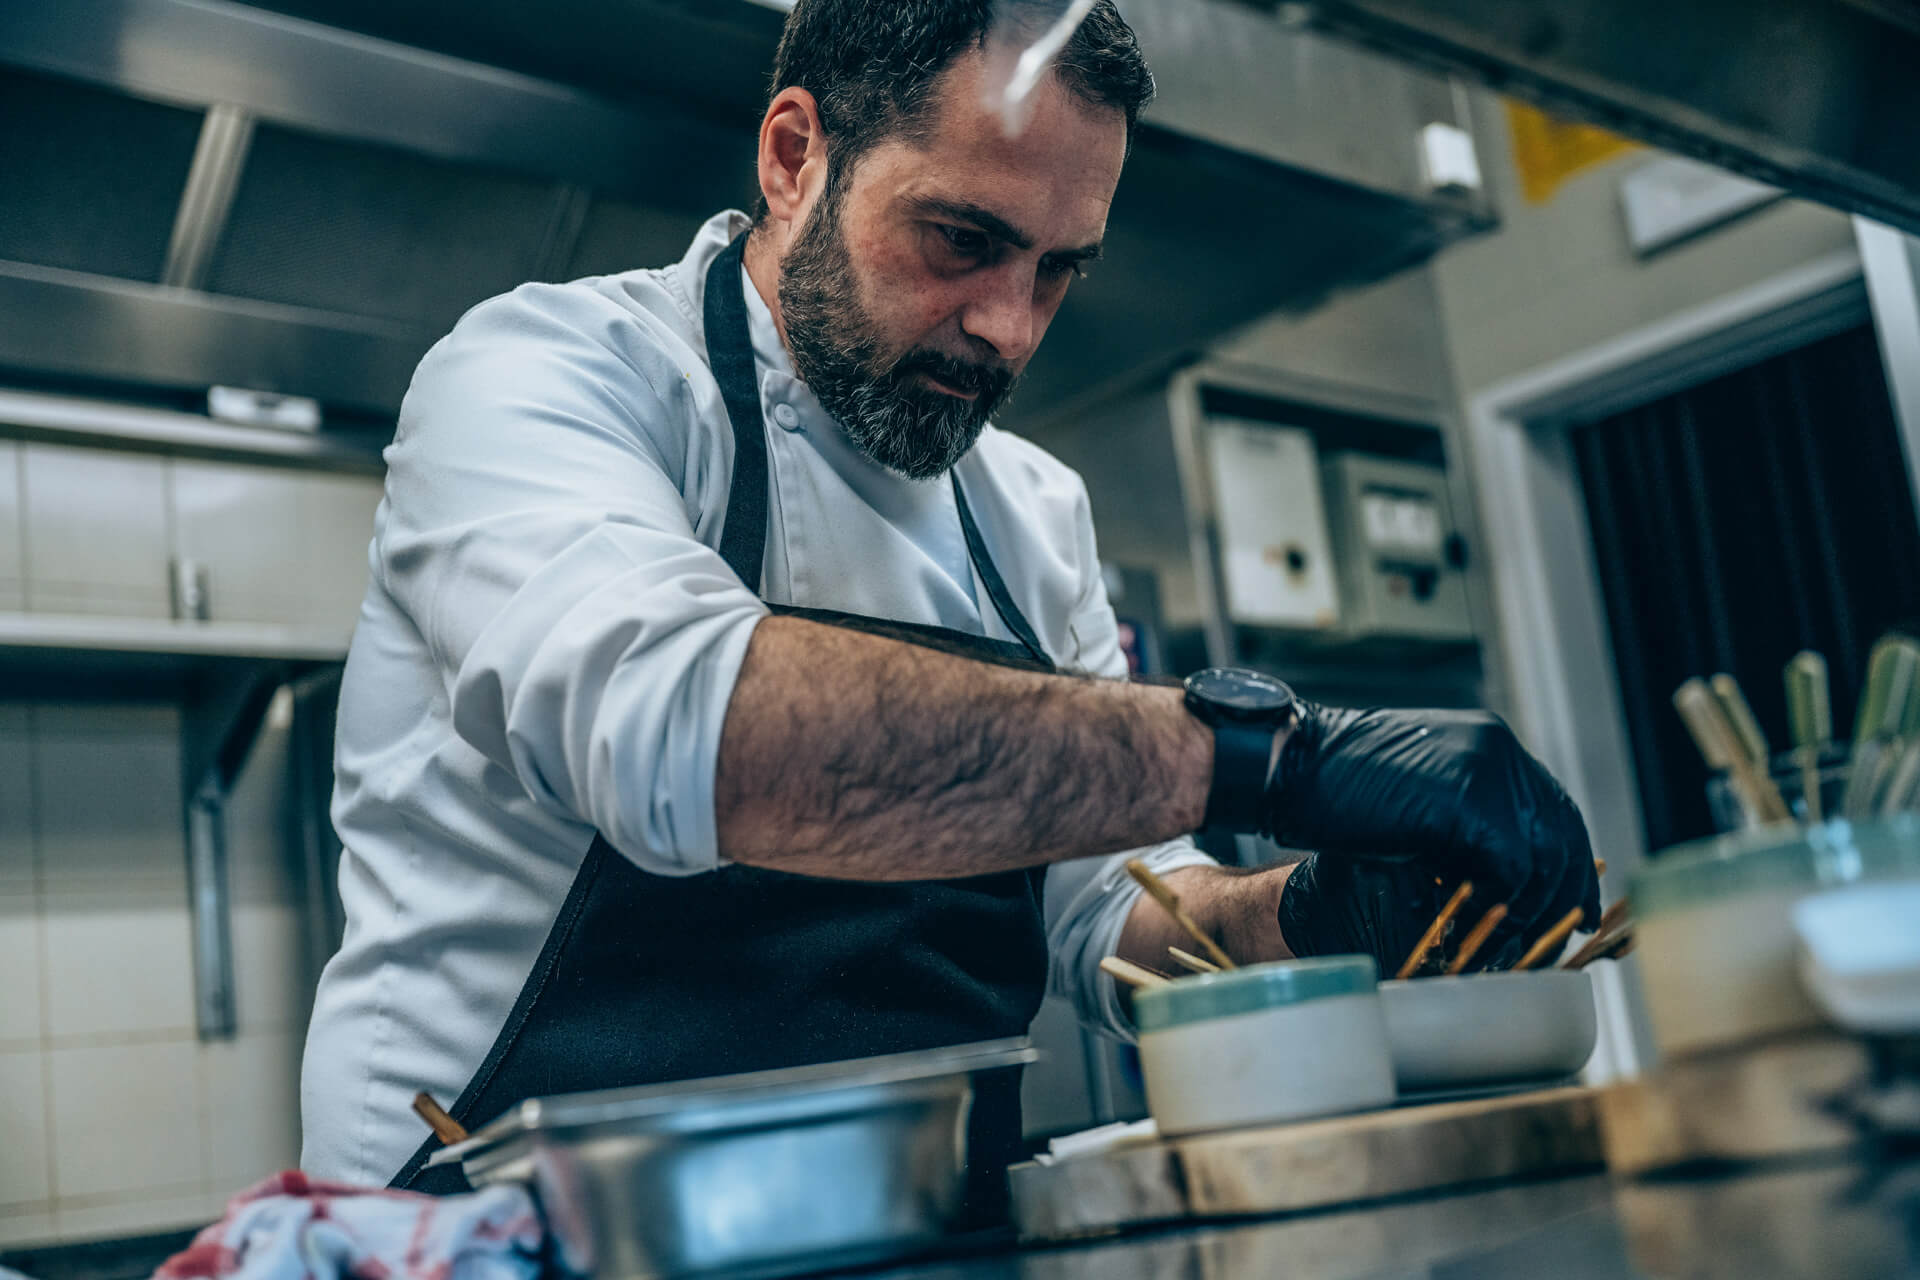 Paolo - Italiaanse event chef voor catering regio leuven